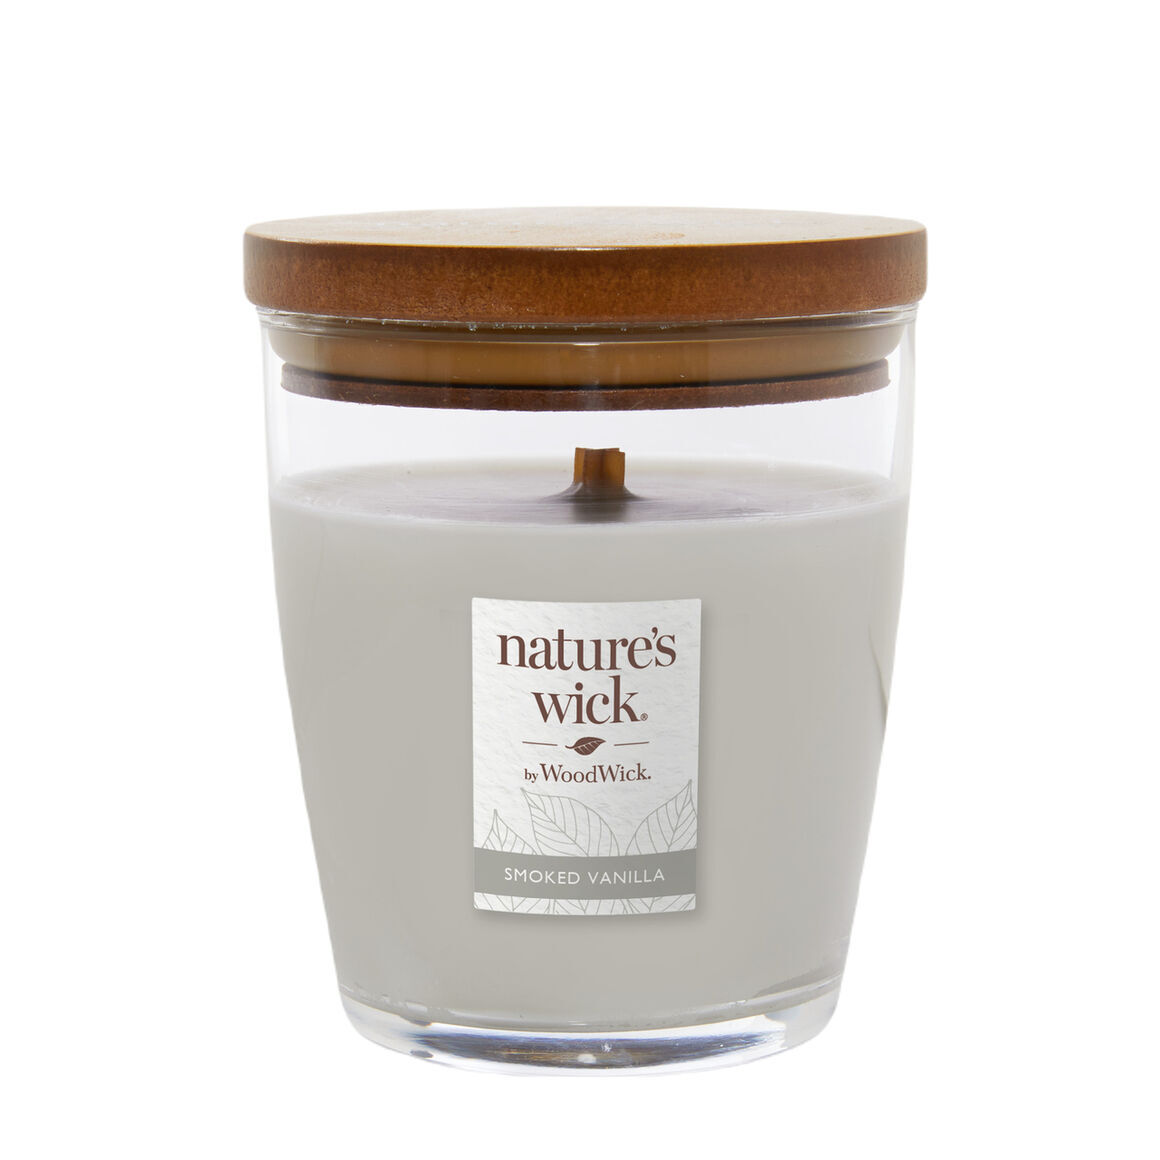 Nature's Wick By WoodWick Smoked Vanilla Ароматическая свеча копченая ваниль, 284 г